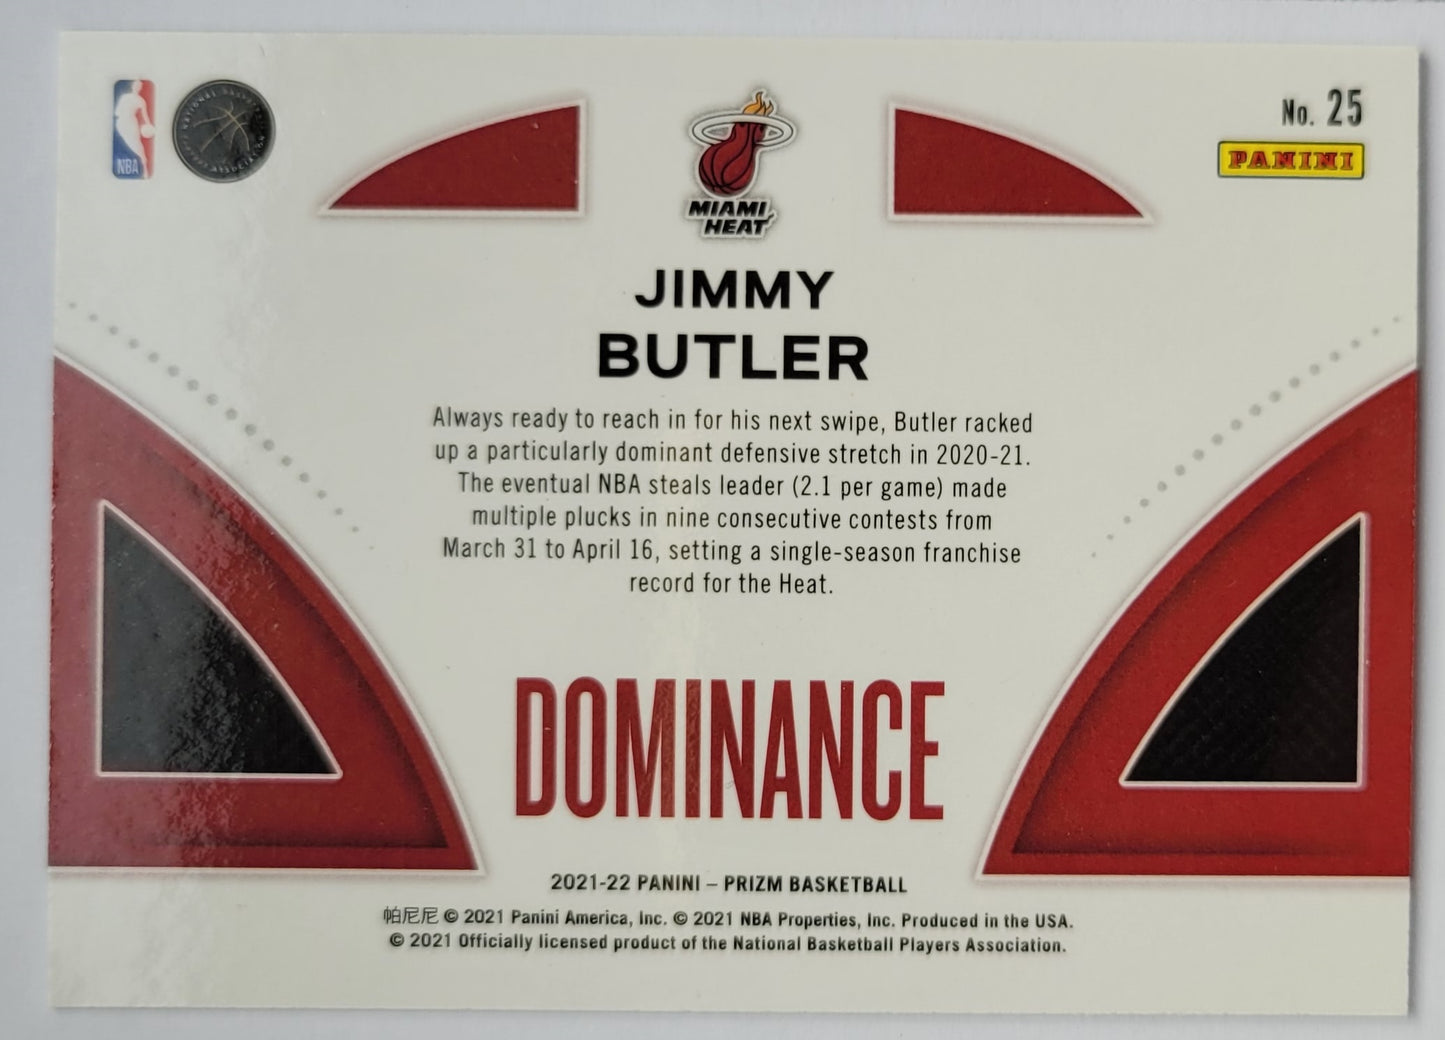 Jimmy Butler - 2021-22 Panini Prizm Dominance #25